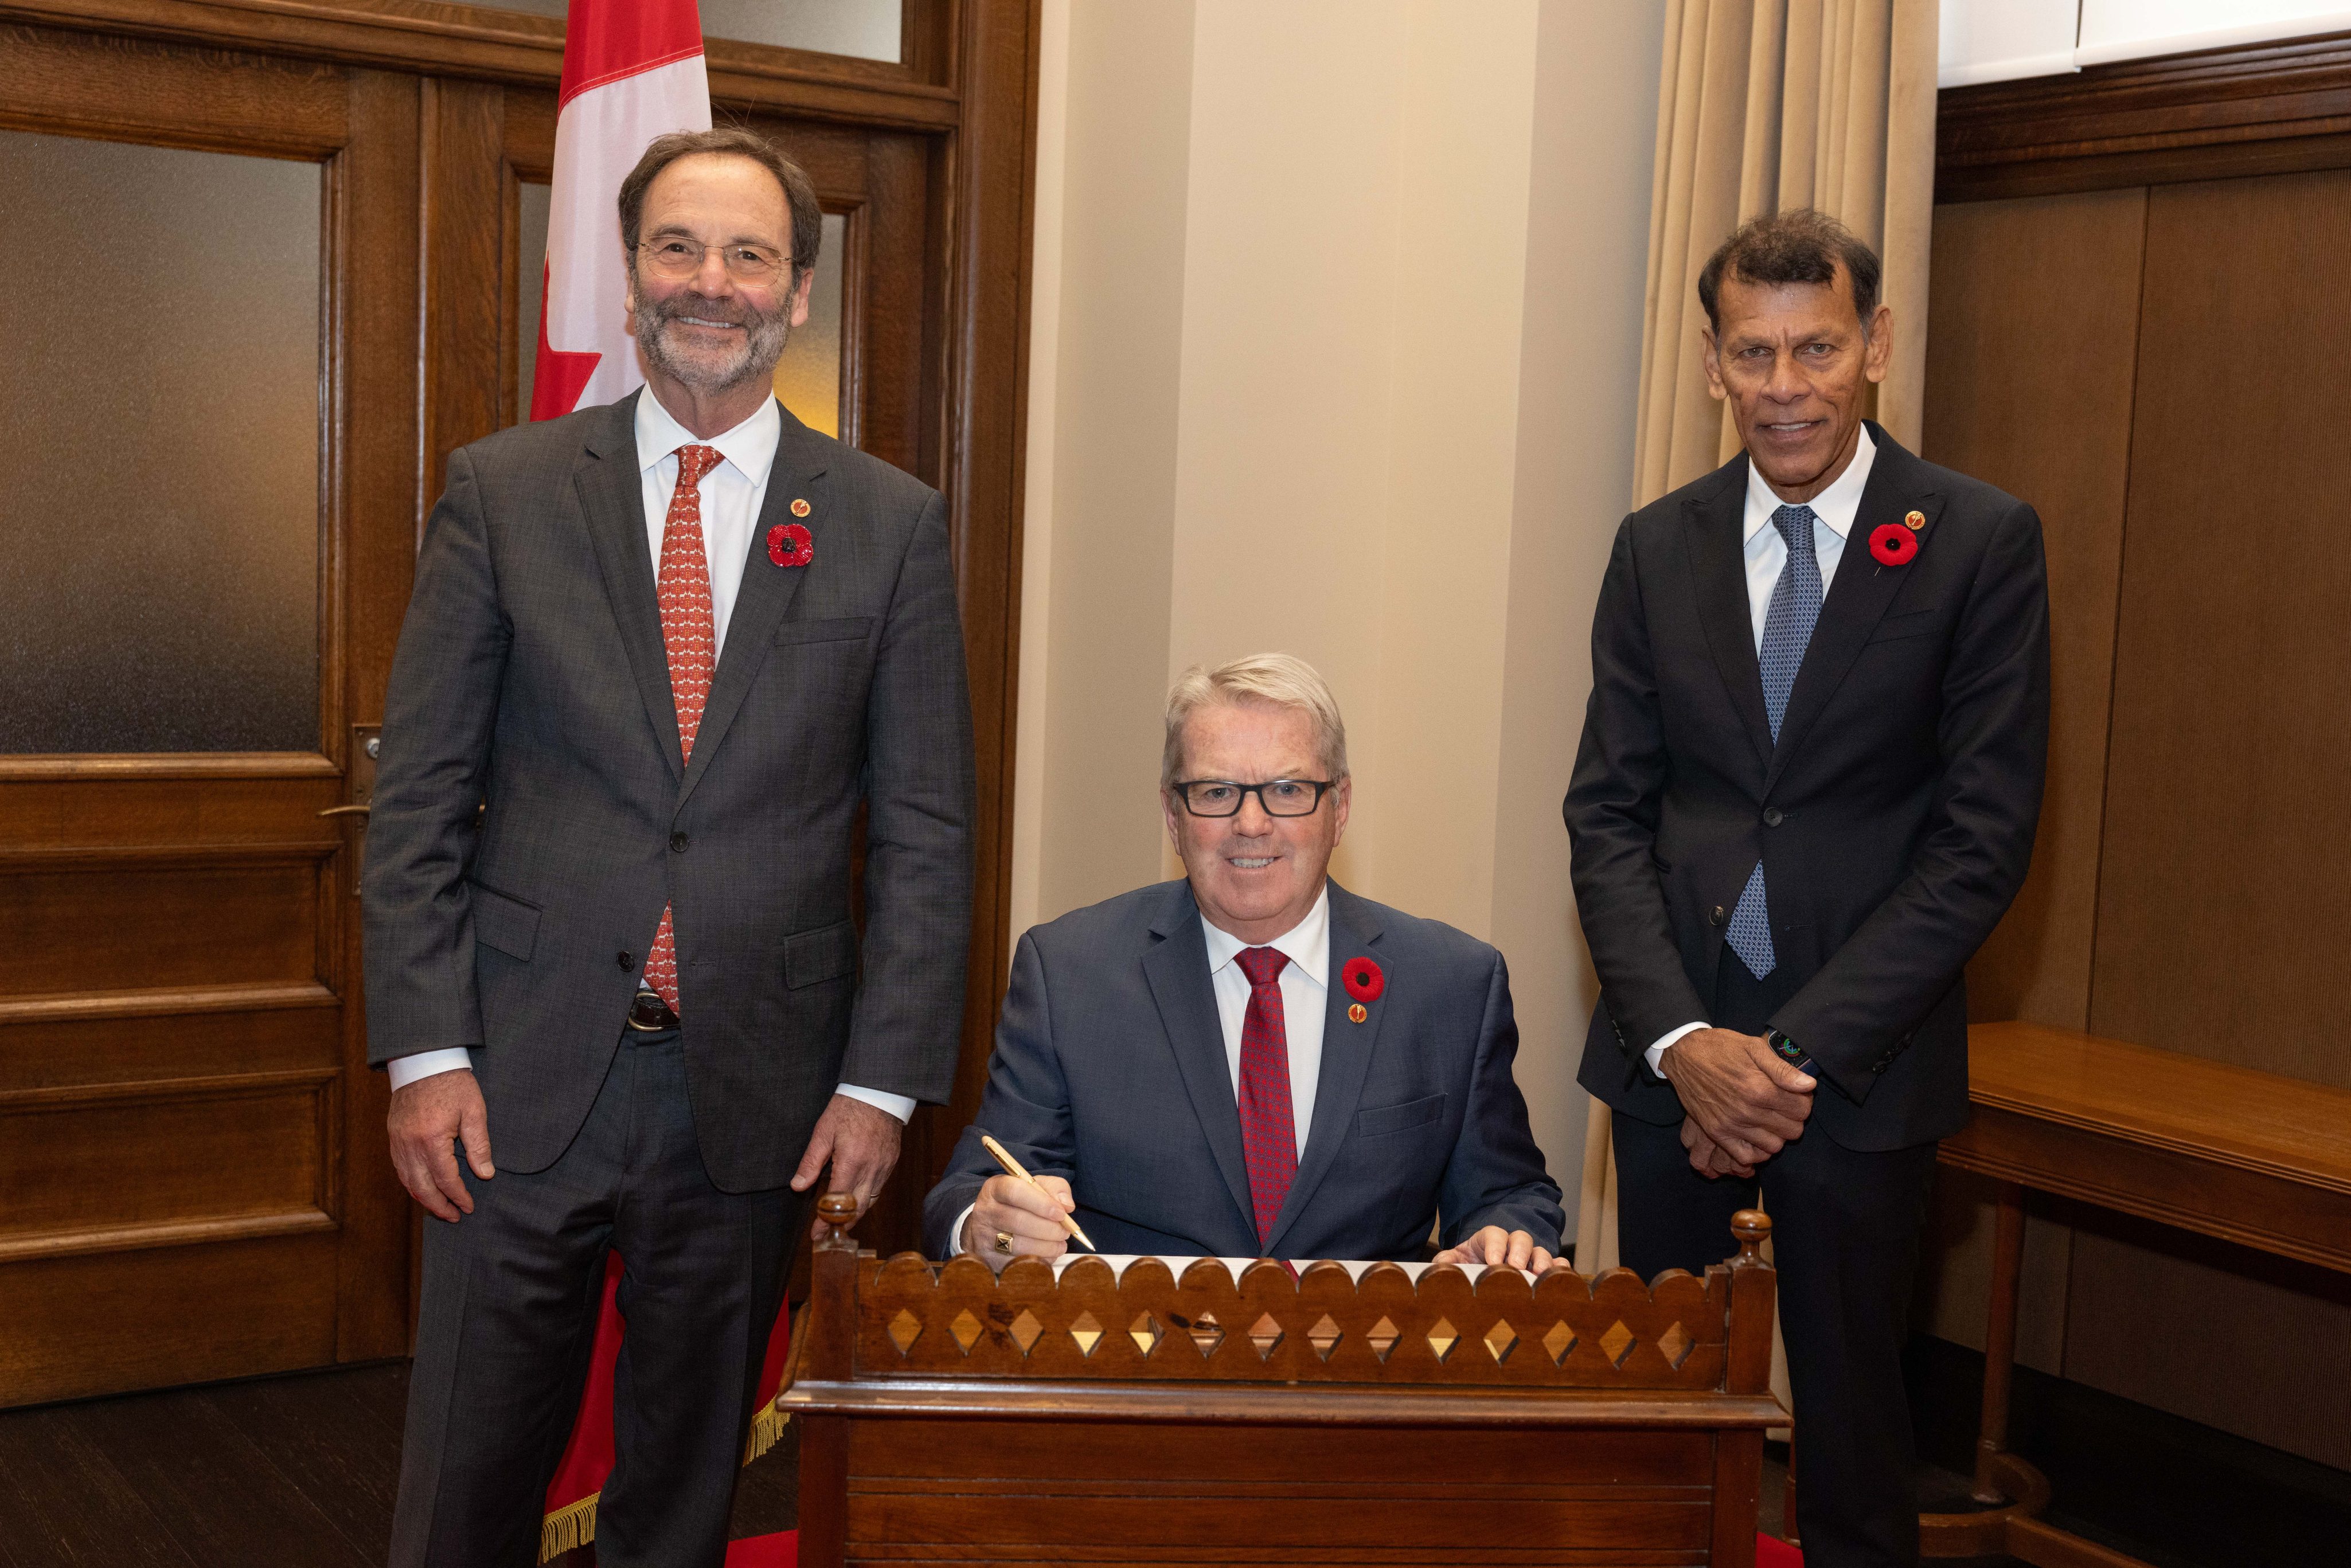 New independent Nova Scotia senator sworn in